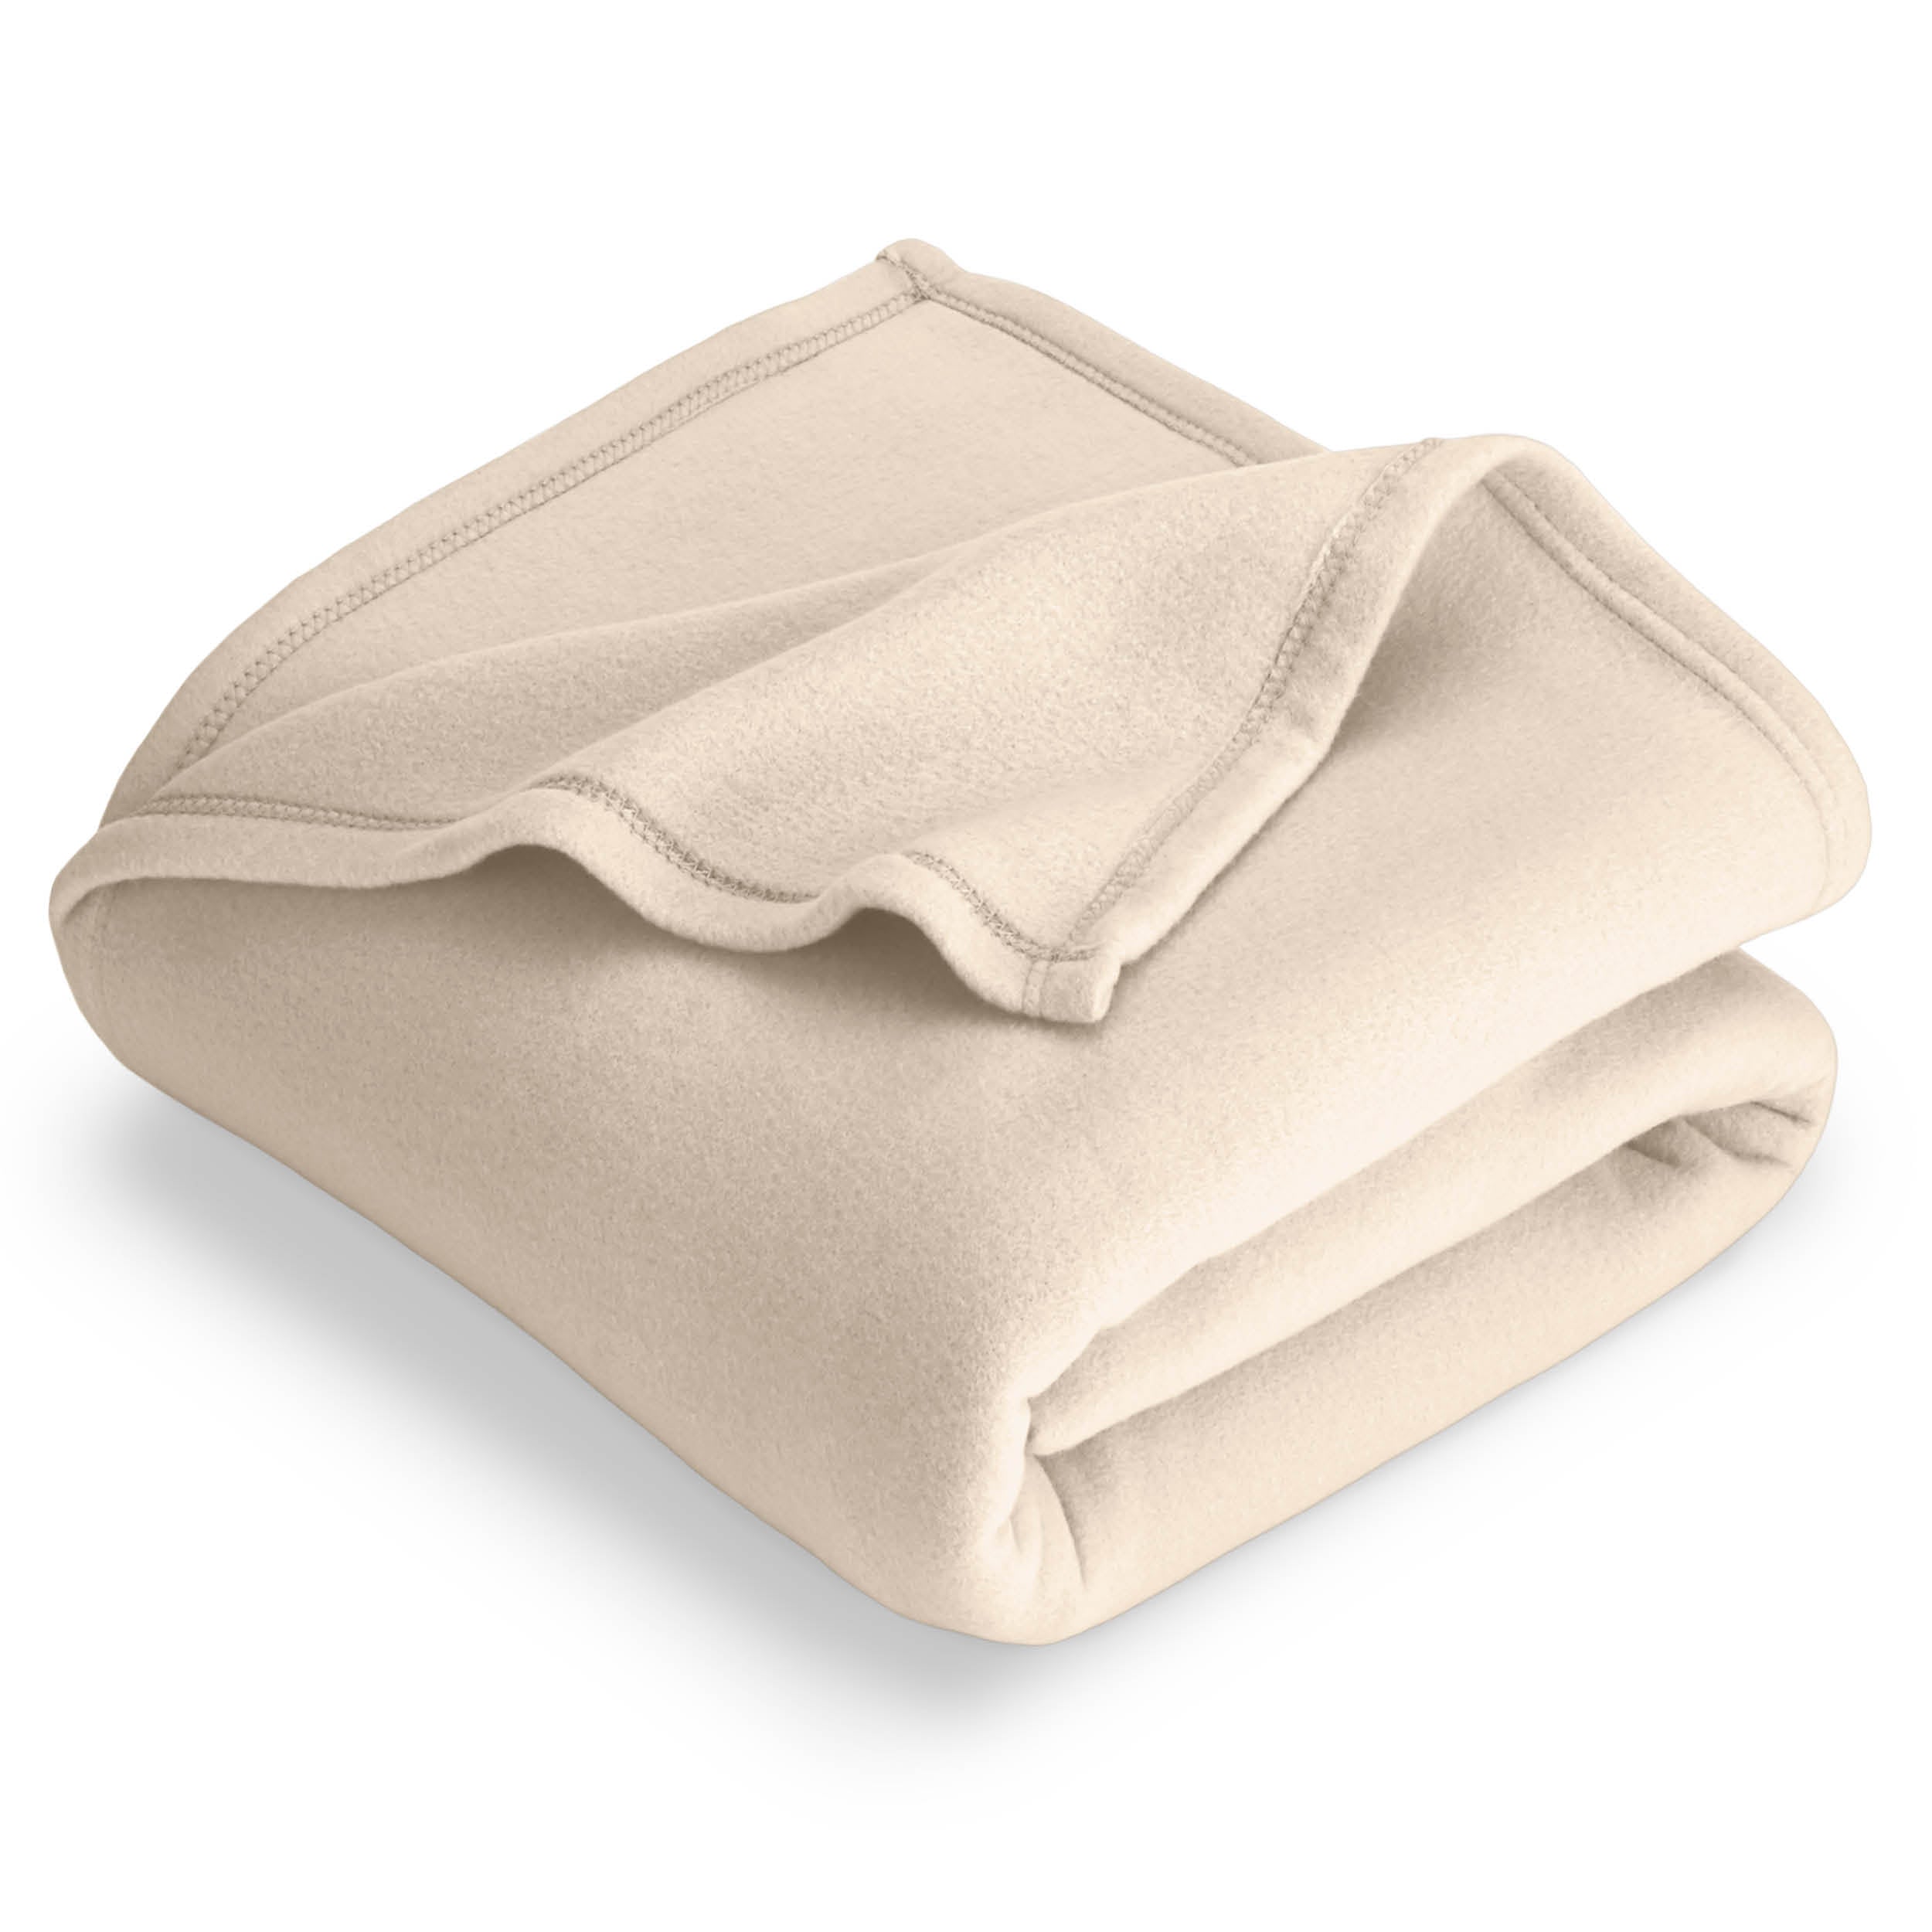 Sand polar fleece blanket folded with 1 corner folded back